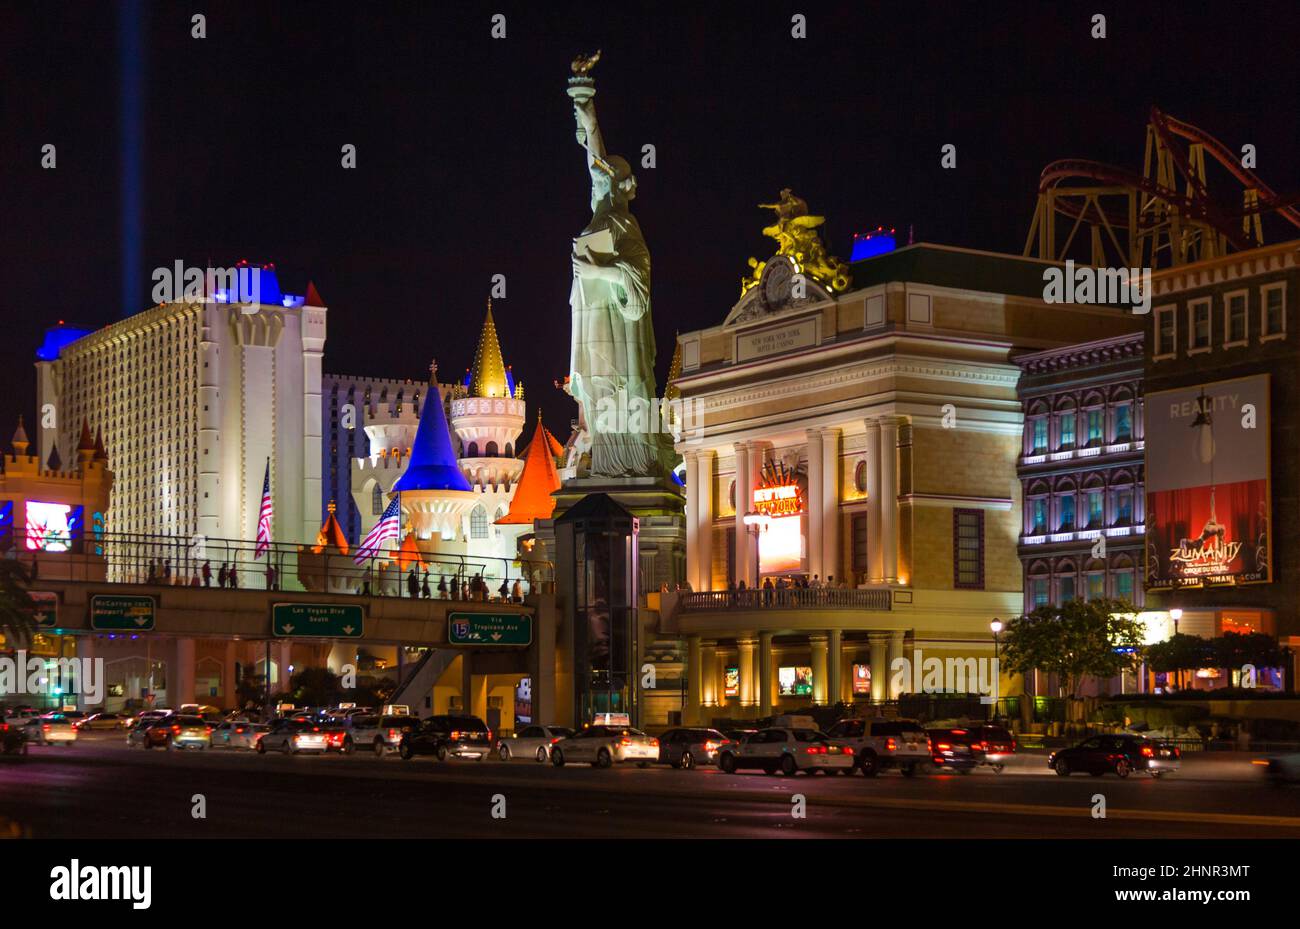 New York-New York located on the Las Vegas Strip is shown in Las Vegas Stock Photo